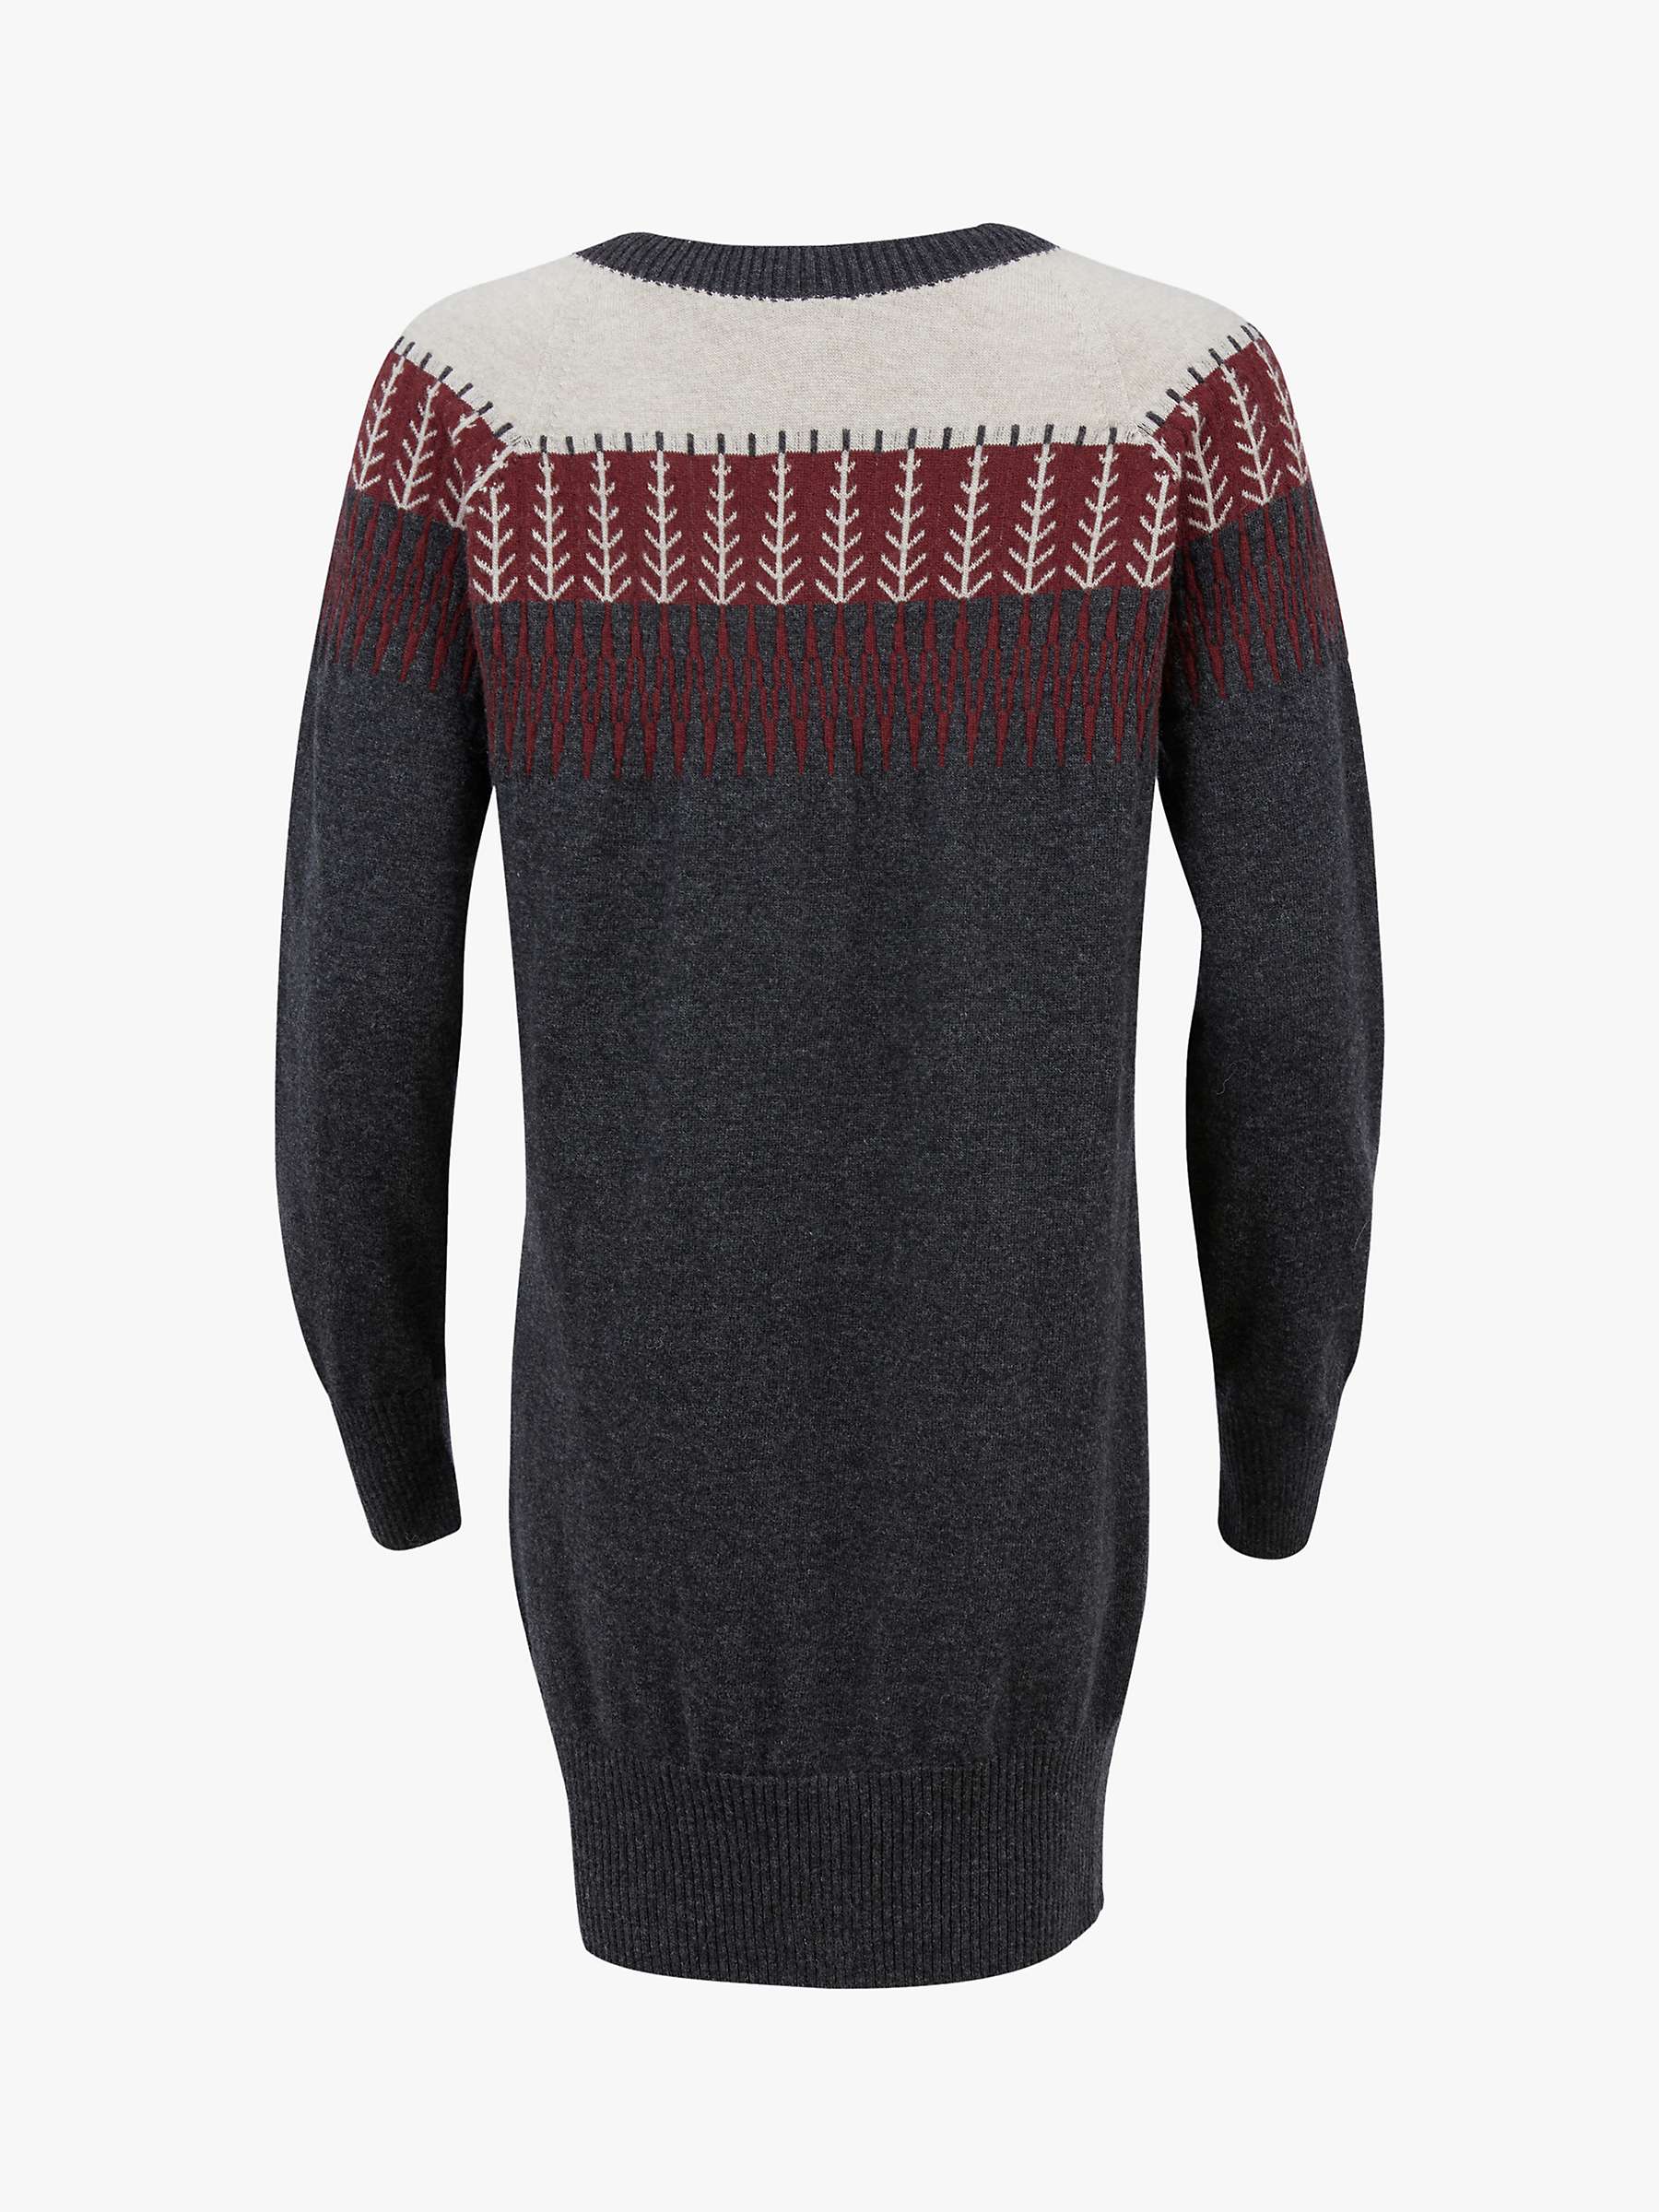 Buy Celtic & Co. Supersoft Slouch Wool Jumper Dress, Charcoal/Claret Online at johnlewis.com